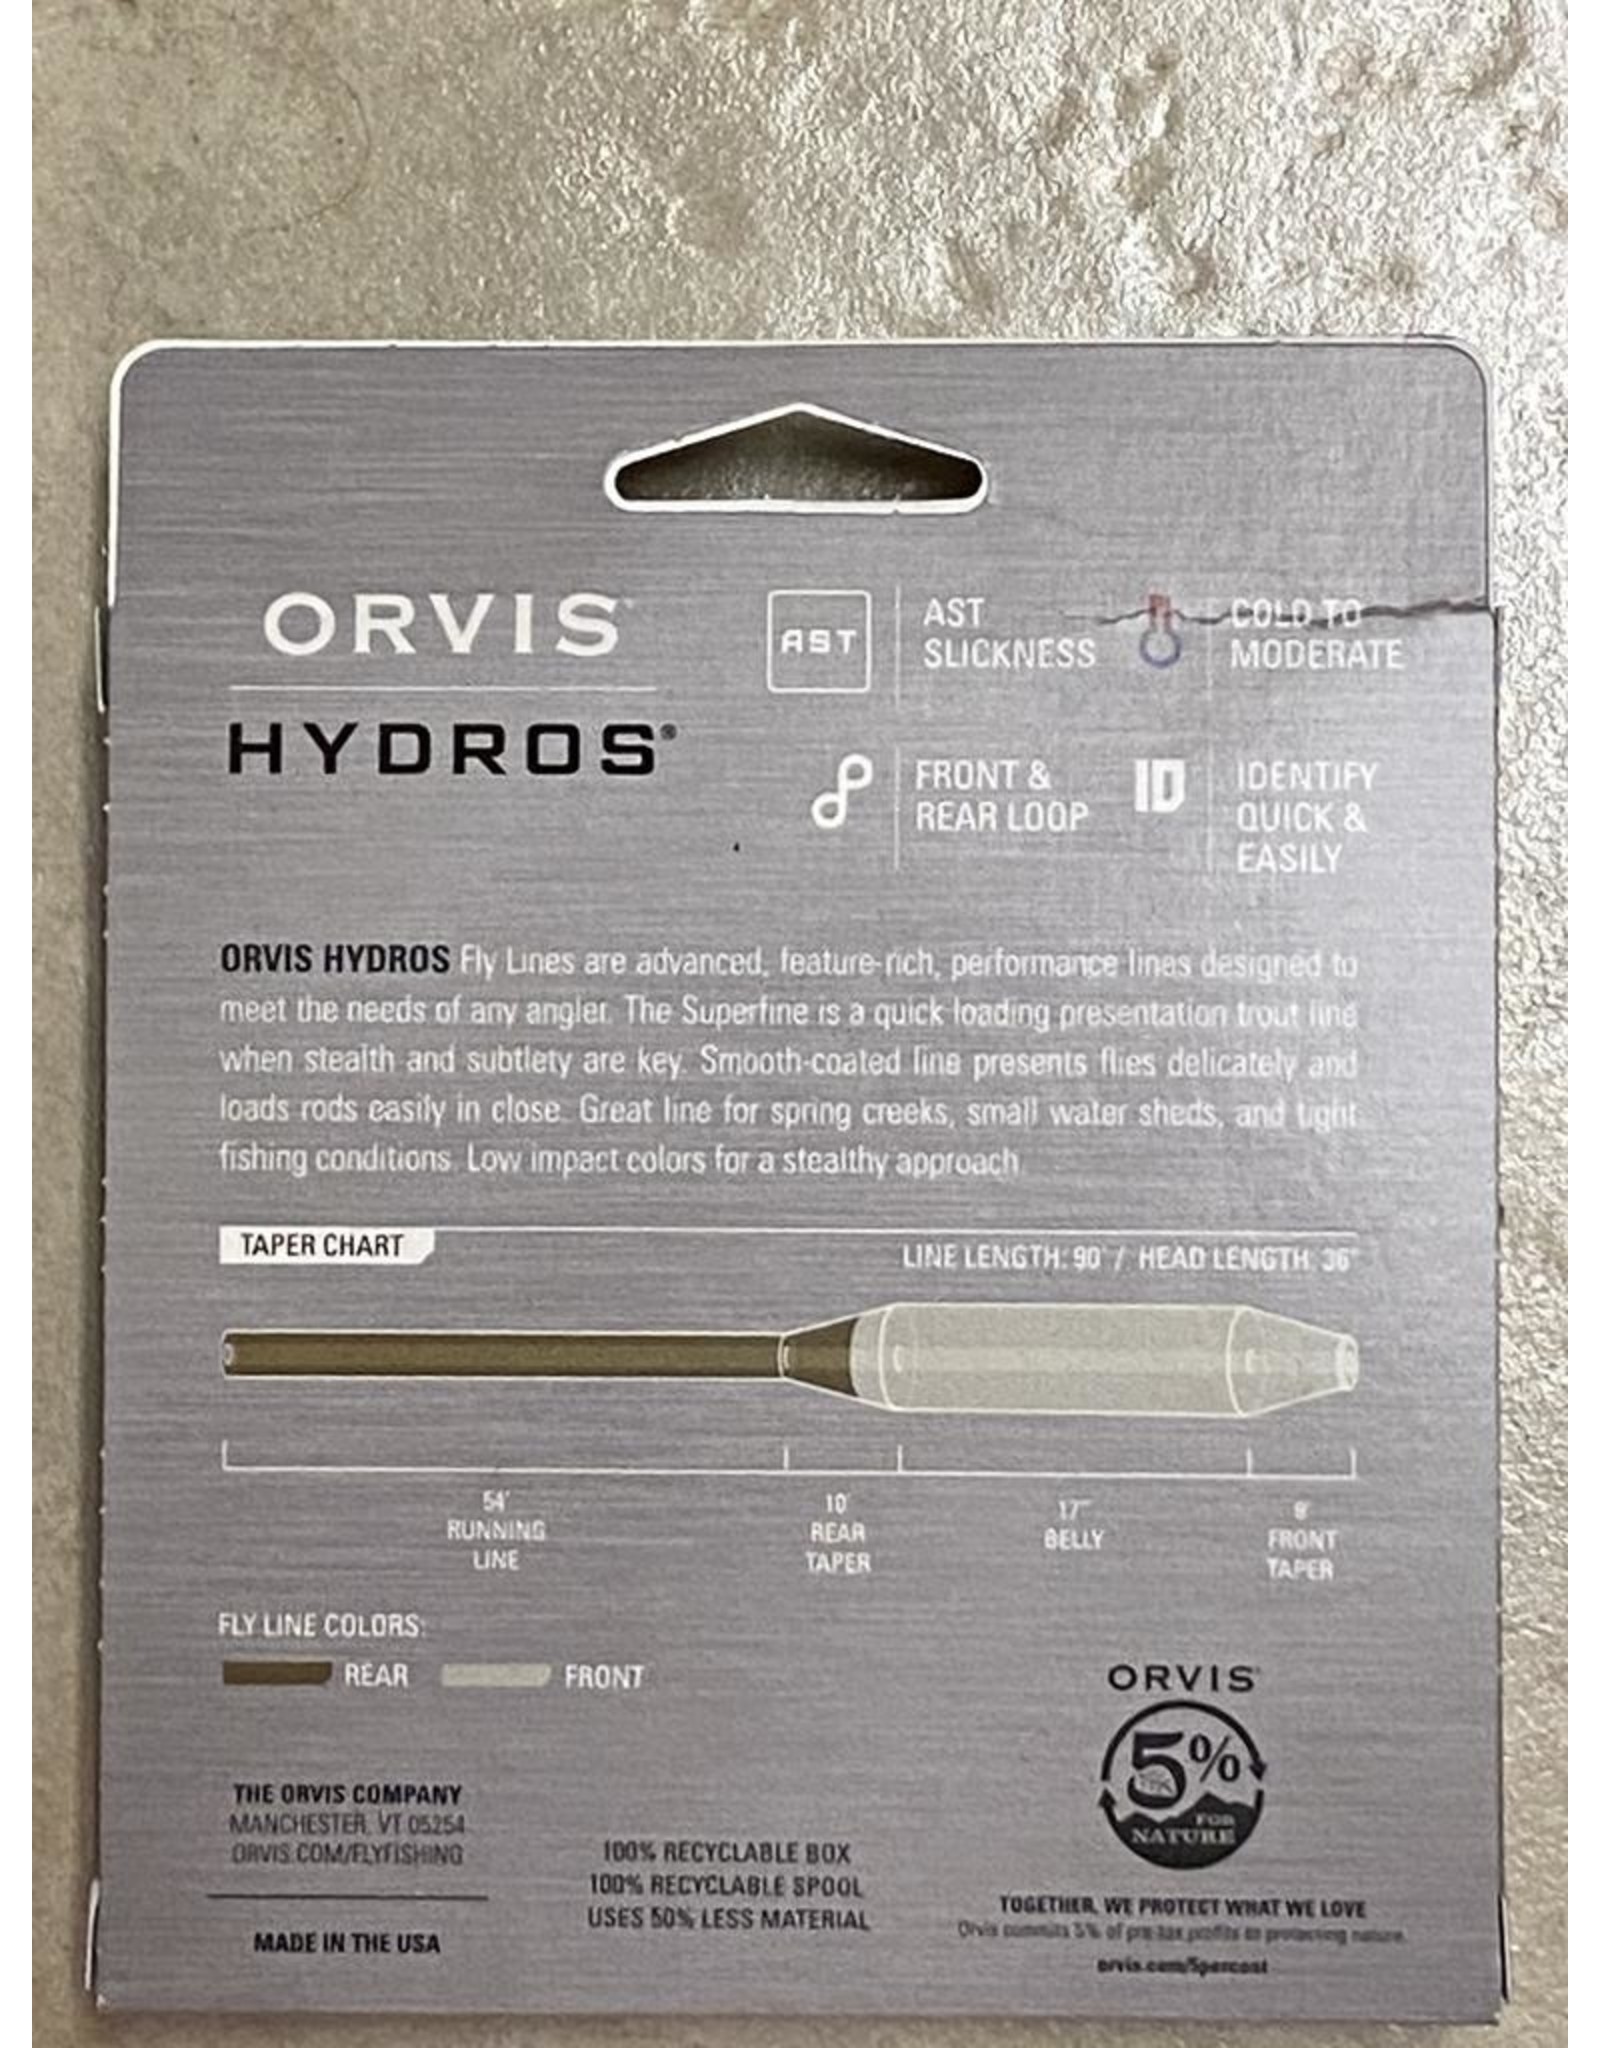 Orvis NEW ORVIS Hydros Superfine Fly Line